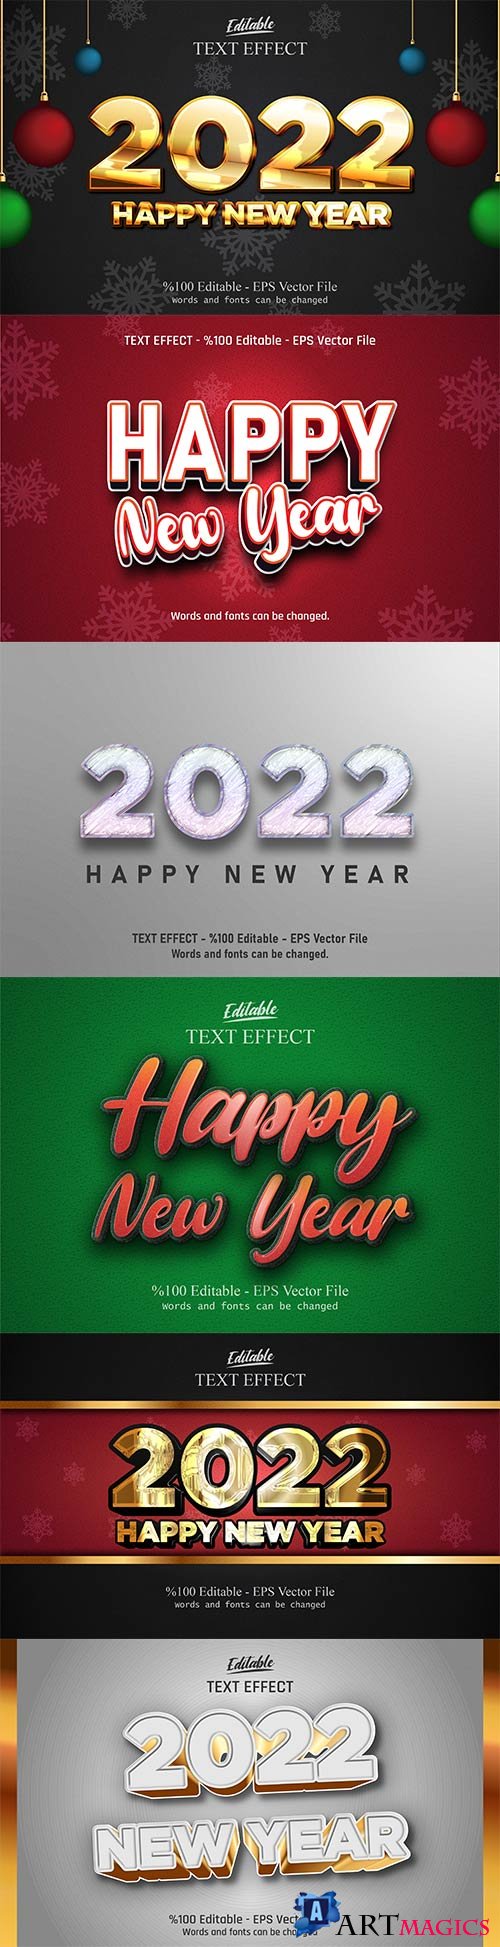 2022 New year, Merry christmas editable text effect premium vector vol 5